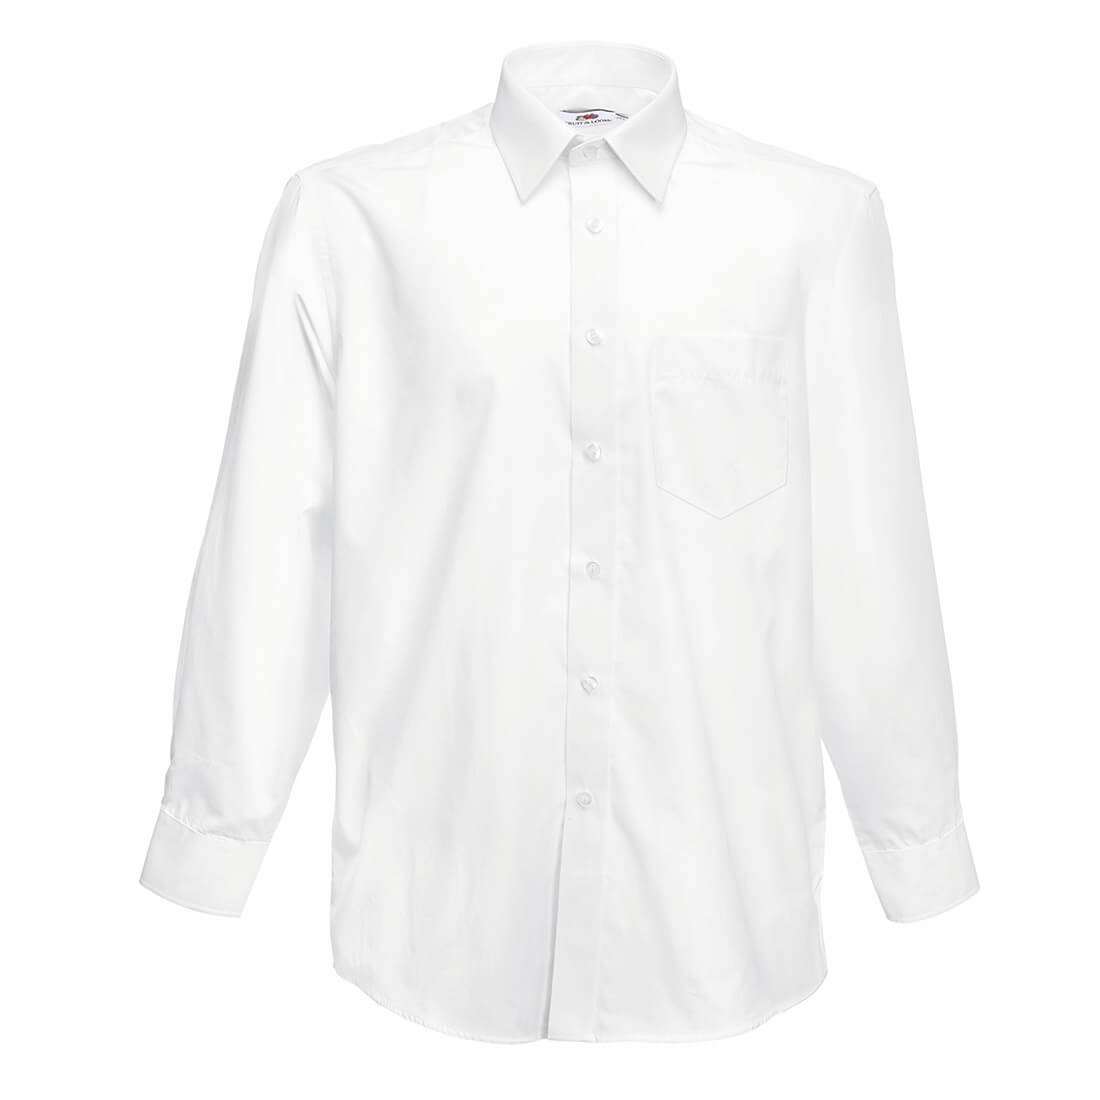 Long Sleeve Poplin Shirt - Safetywear